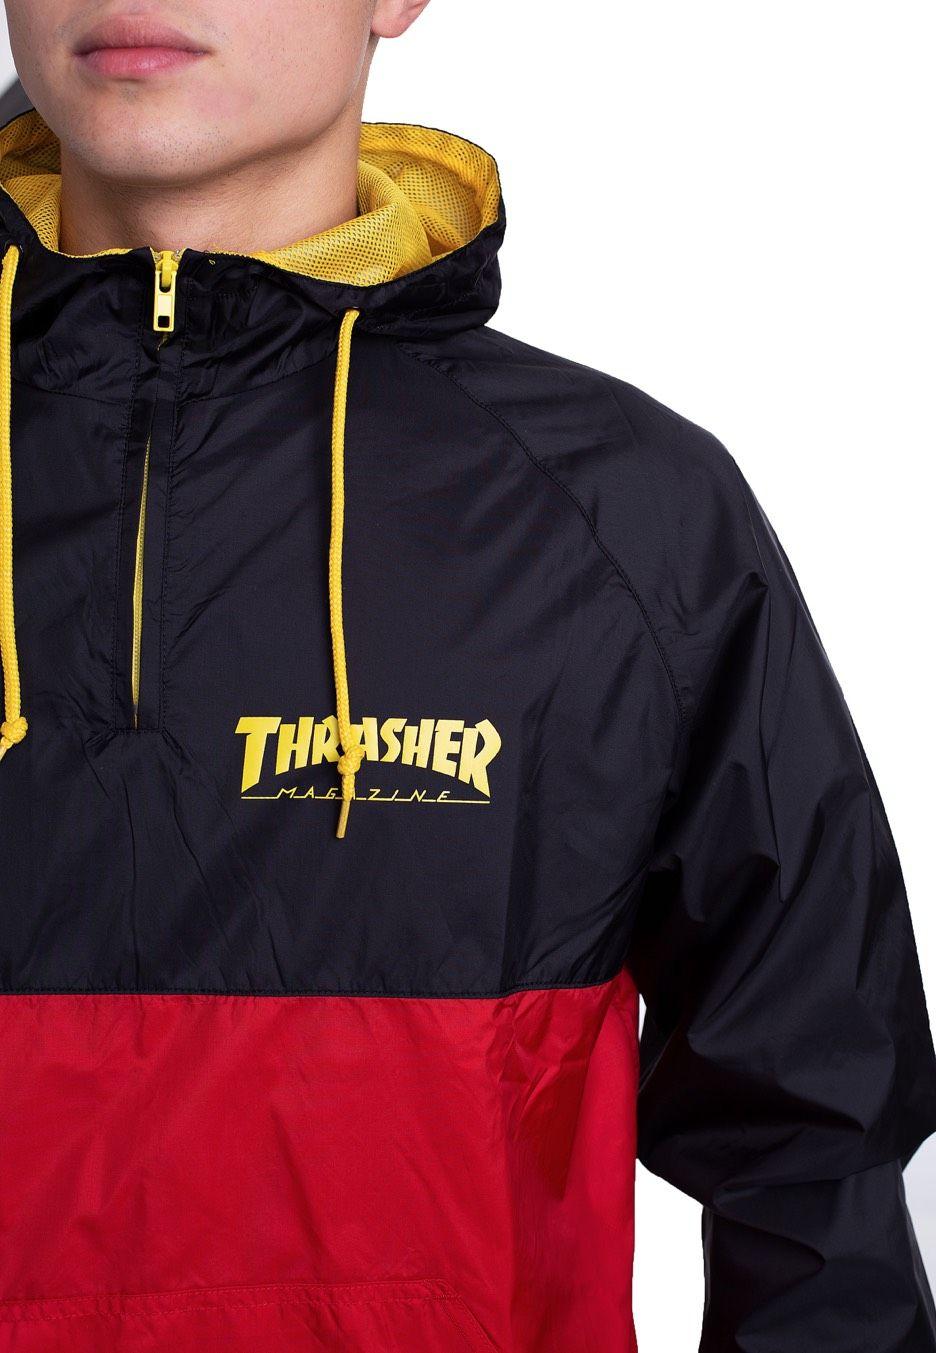 Red Jacket Logo - Thrasher - Mag Logo Black/Red - Jacket - Streetwear Shop - Impericon ...